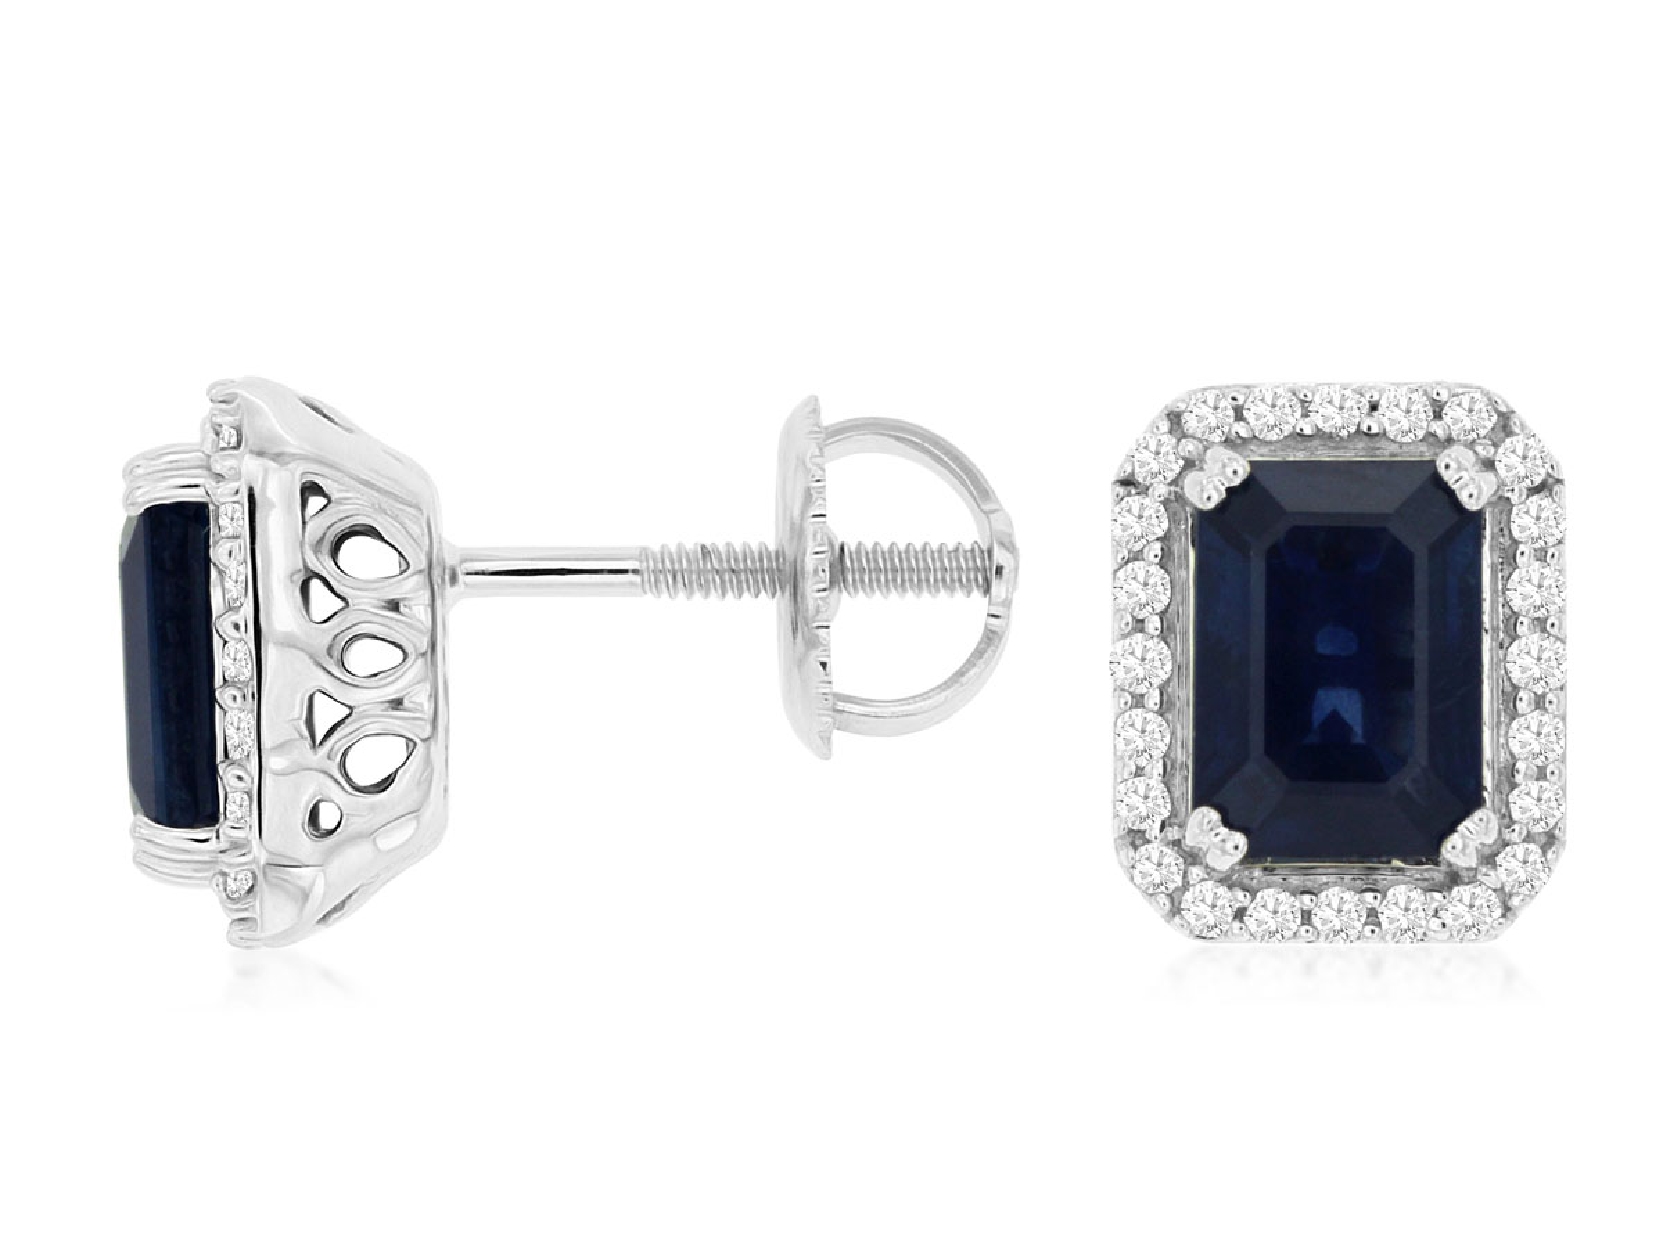 14K White Gold Emerald Cut Sapphire Stud Earrings with Diamond Halos

0.20cttw Diamonds
2.18cttw Sapphires